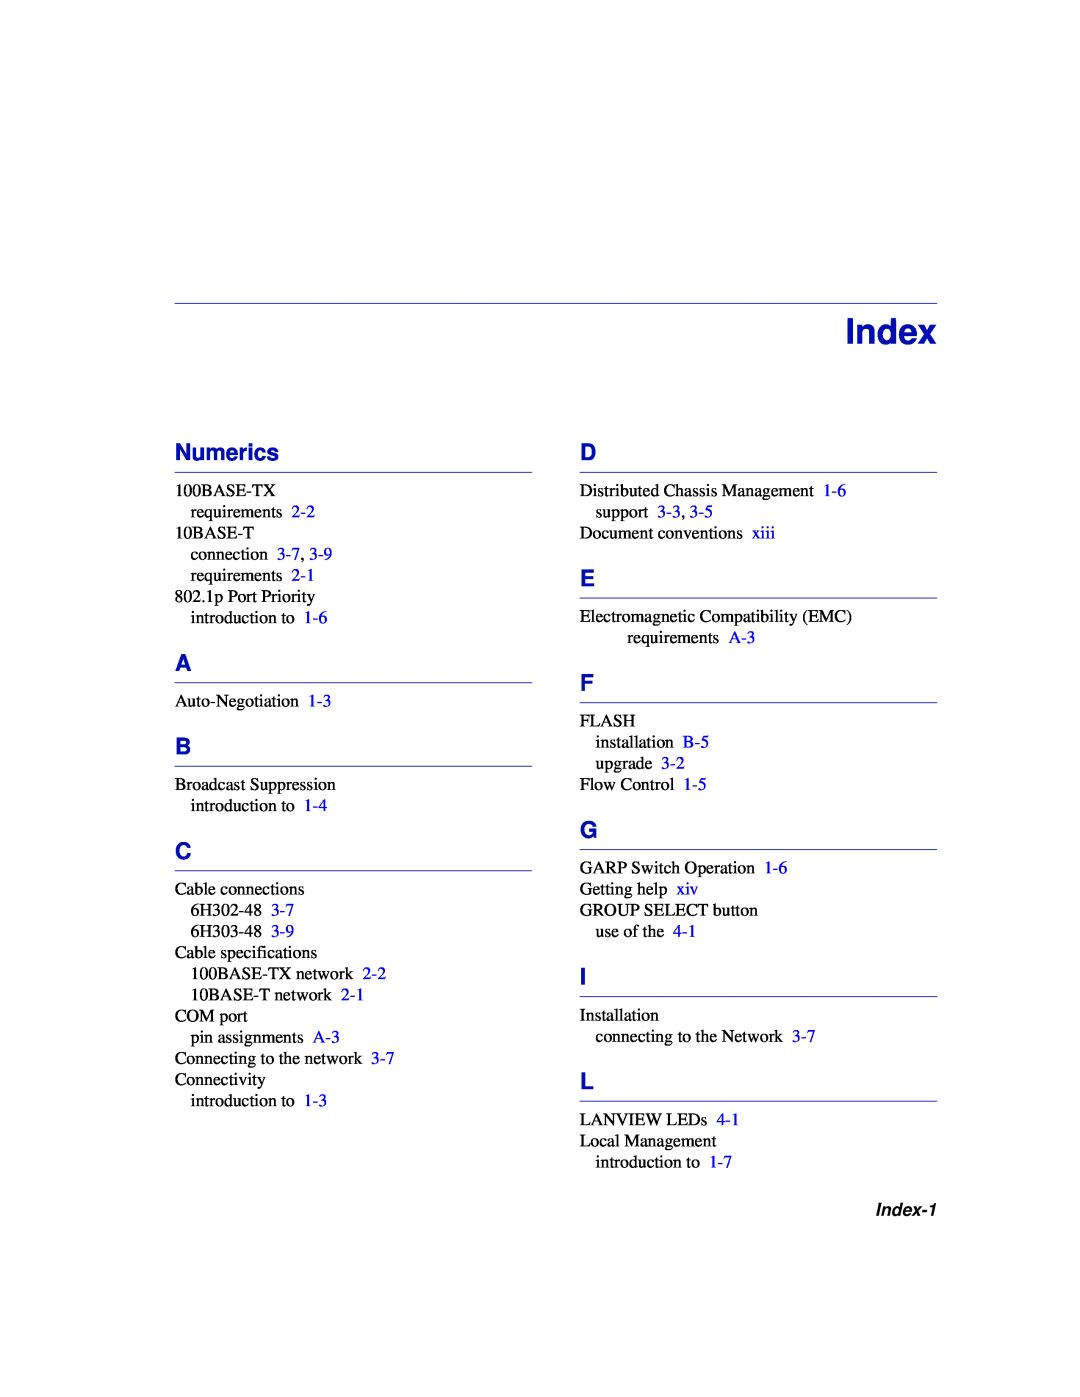 Enterasys Networks 6H302-48 manual Index, Numerics 